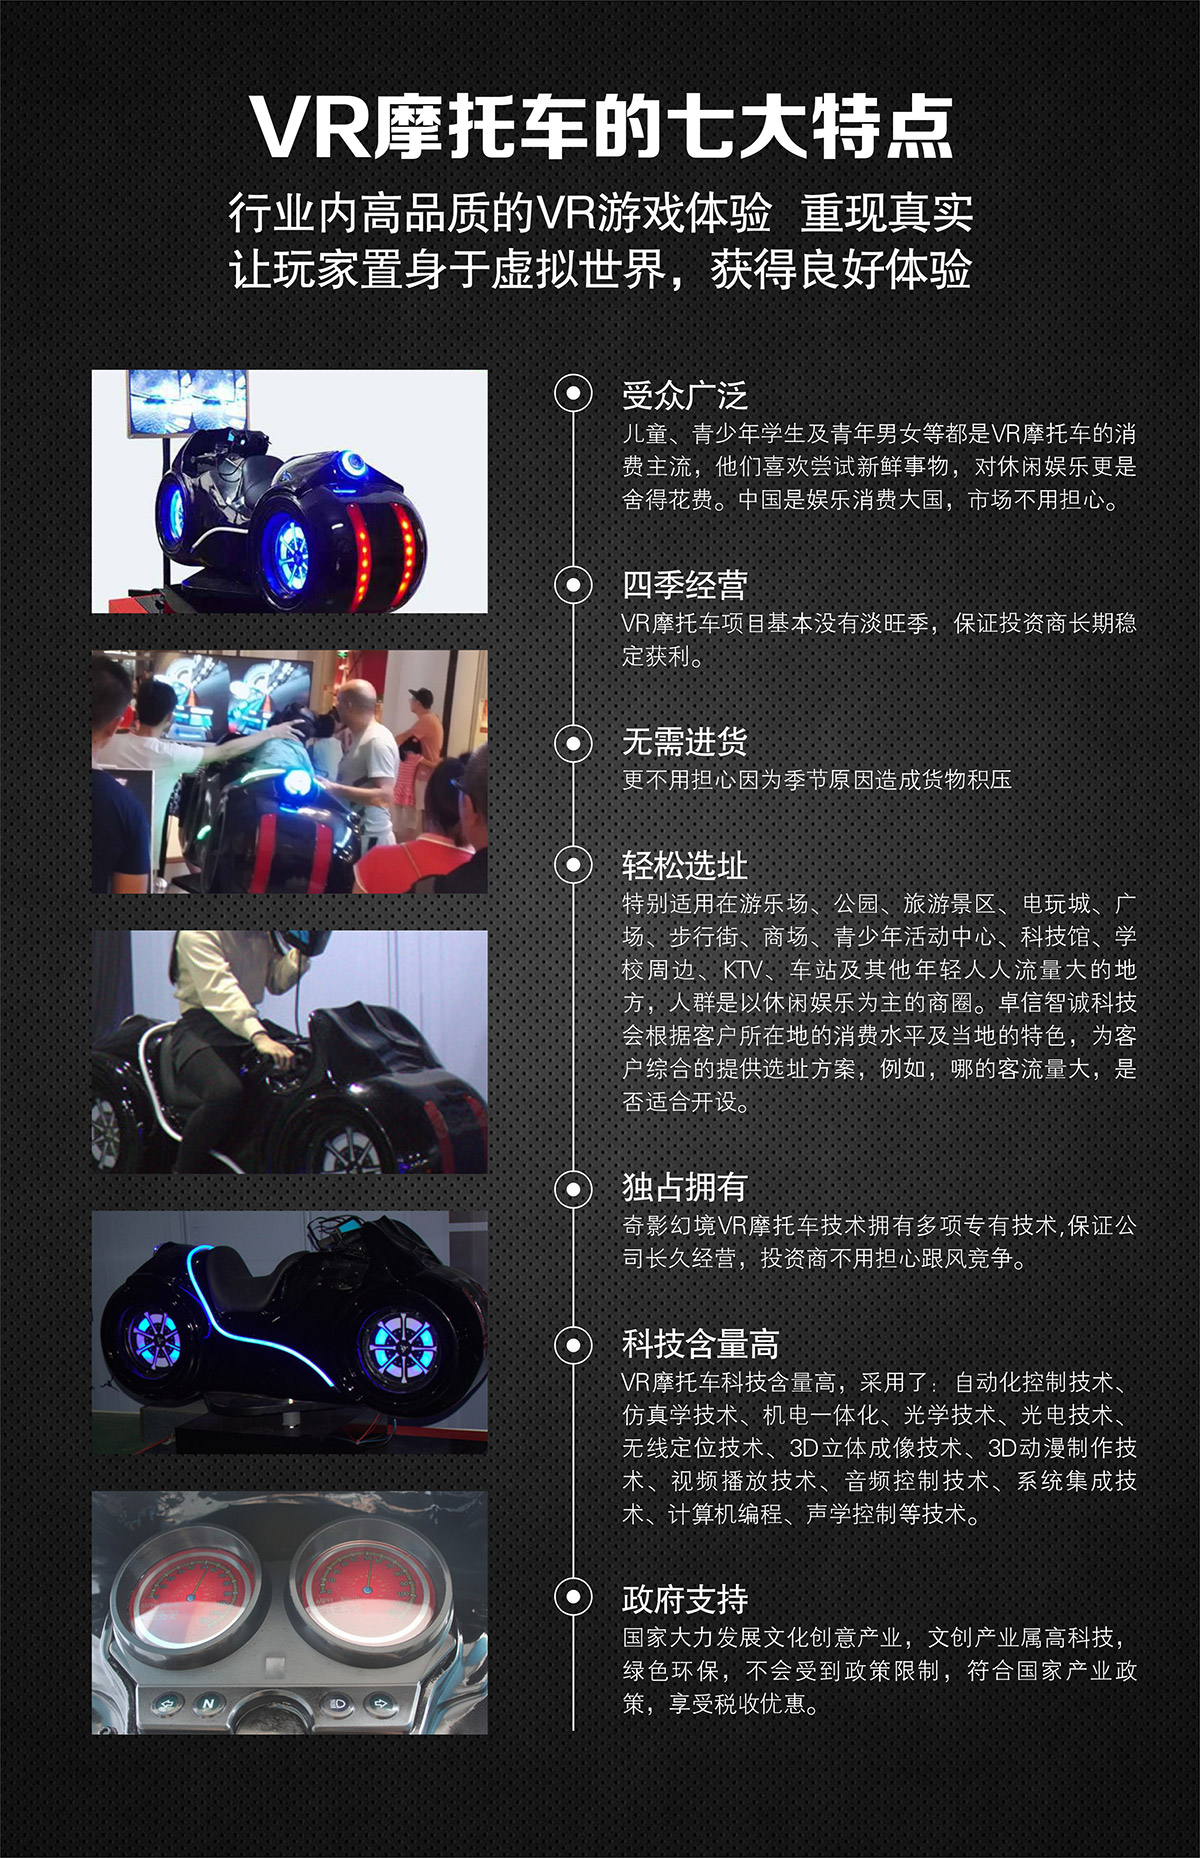 VR摩托车特点高品质游戏体验.jpg